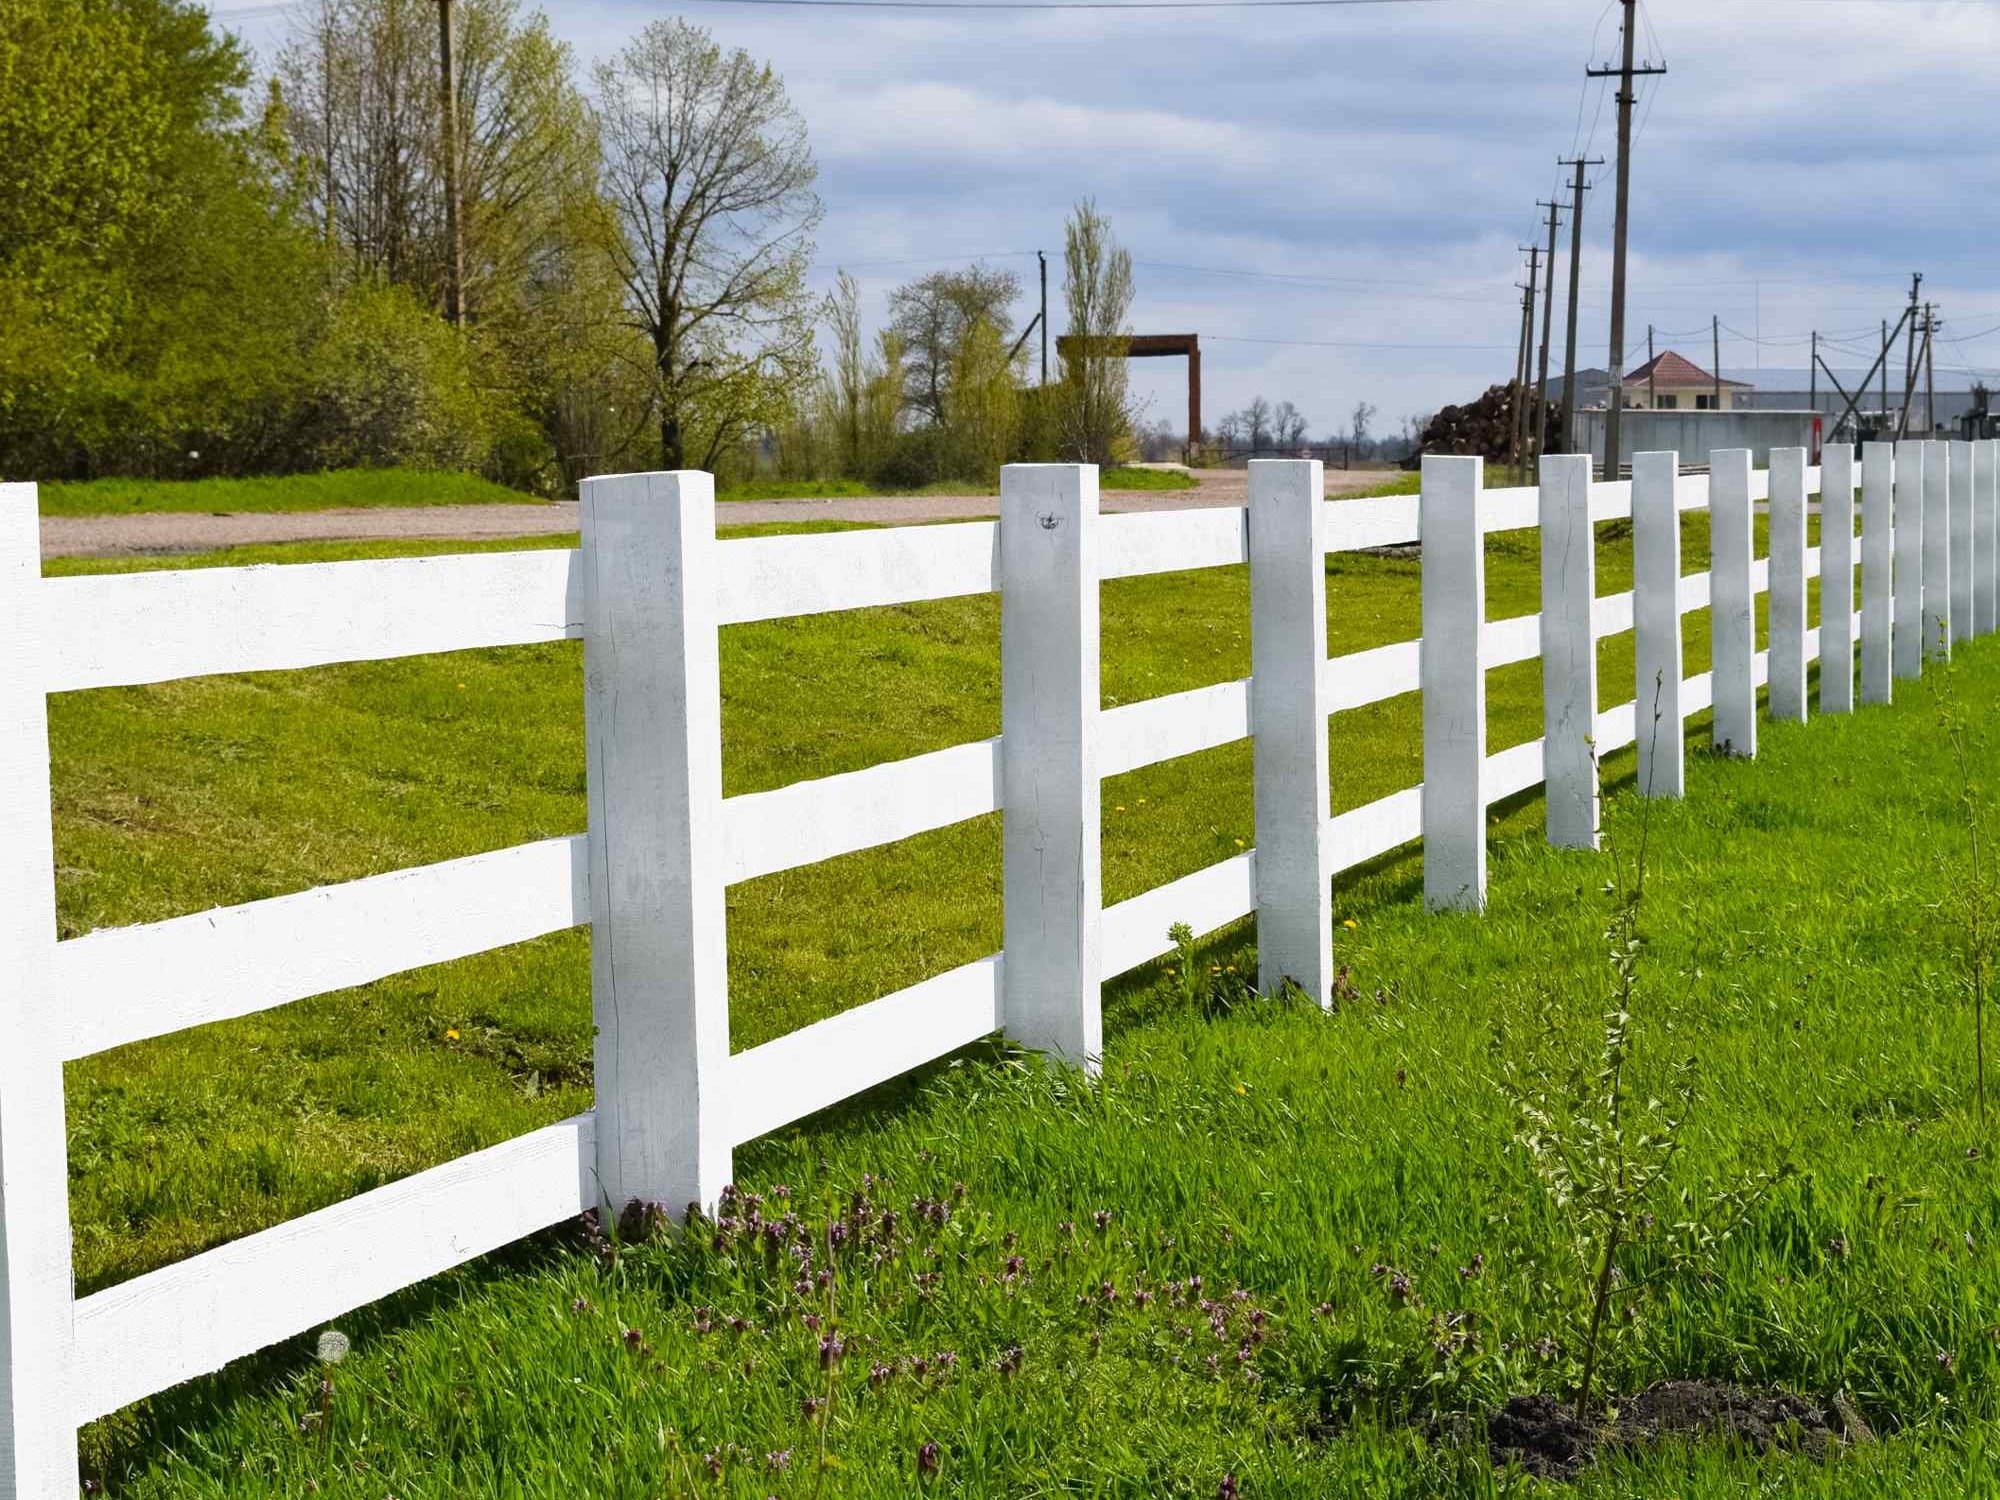 Orangeburg South Carolina residential and commercial fencing